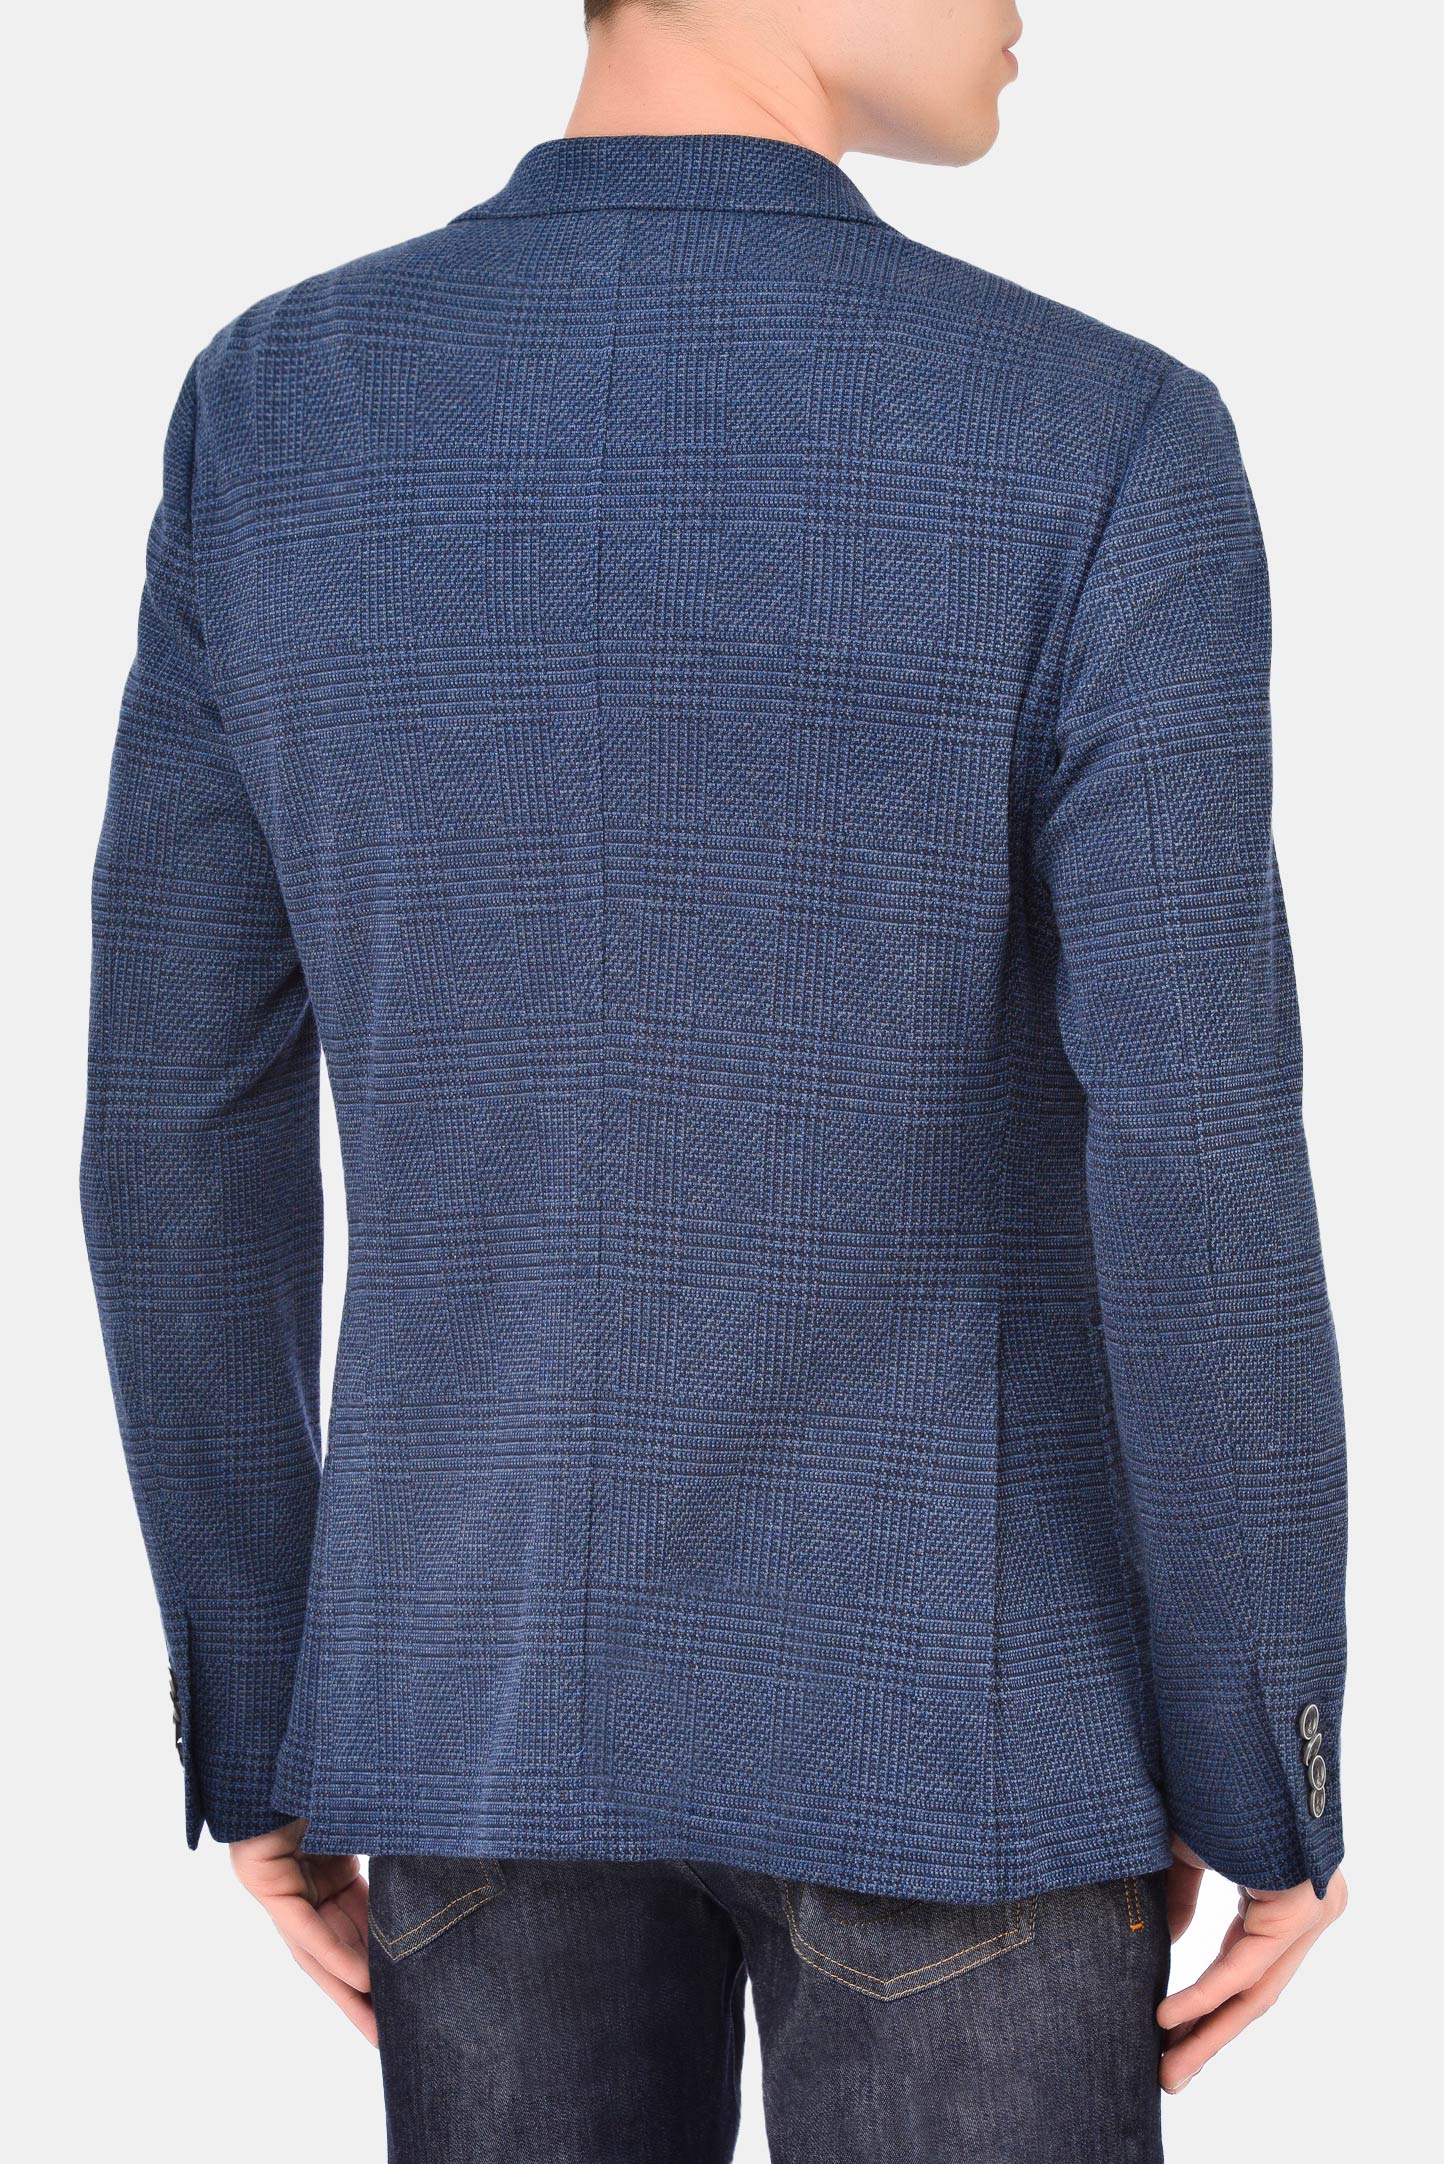 Пиджак CANALI JJ01972/301, цвет: Синий, Мужской